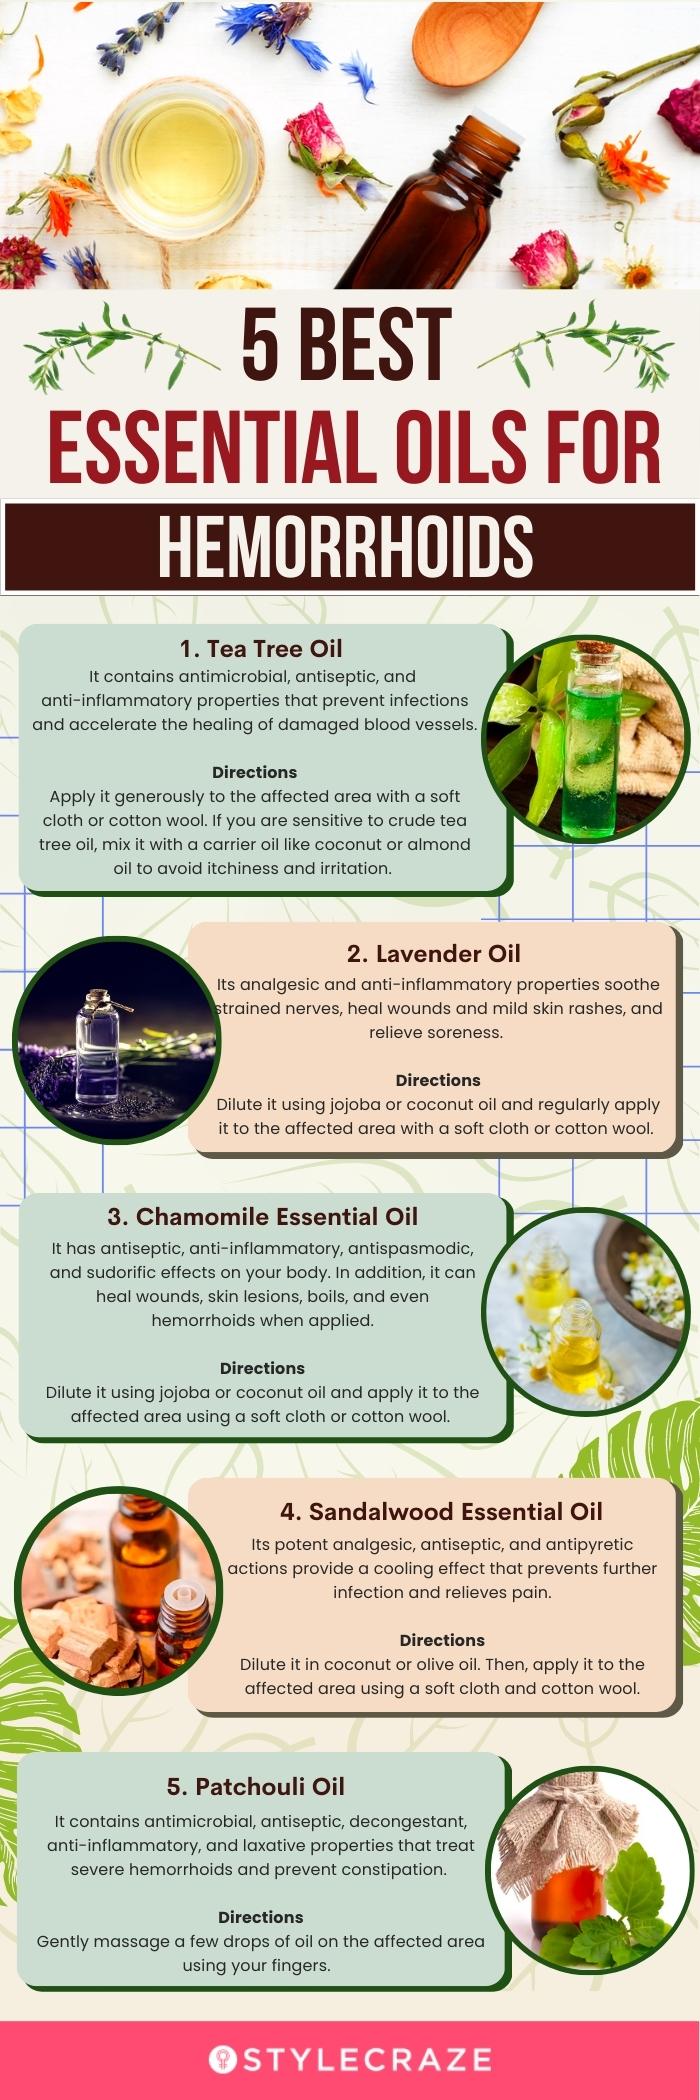 5 best essential oils for hemorrhoids [infographic]